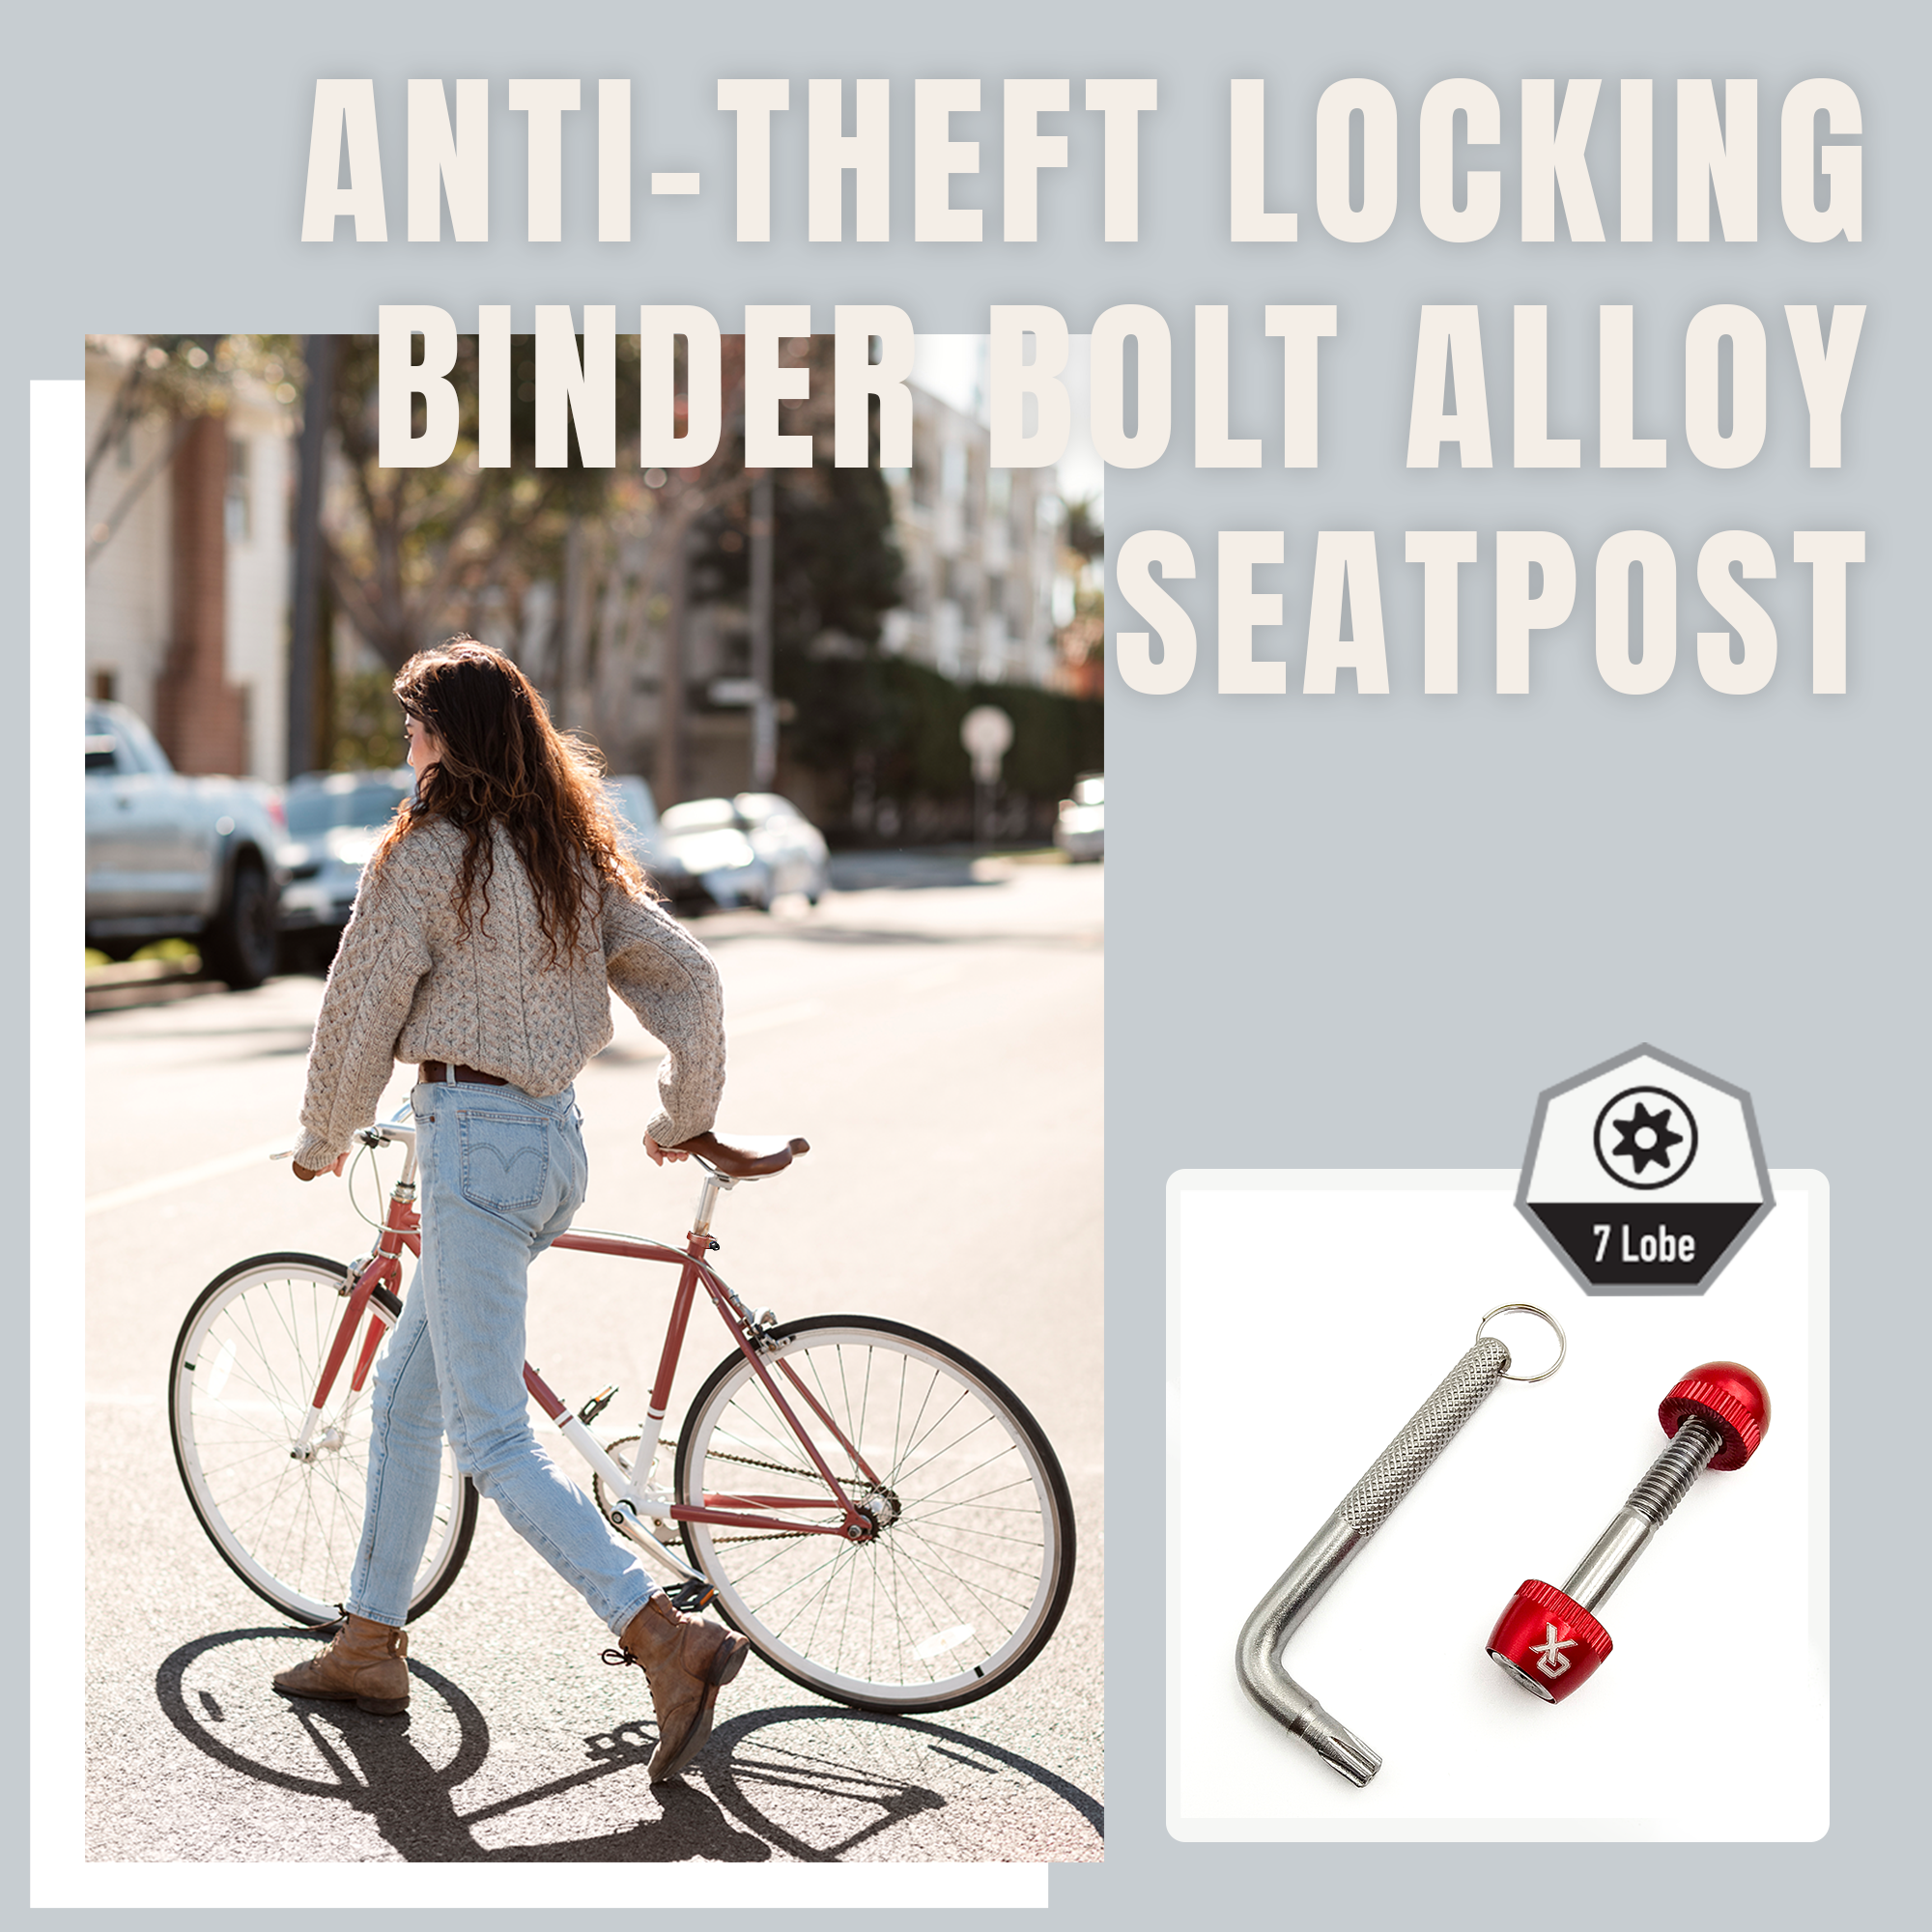 ONIPAX Locking Binder Bolt Alloy Seatpost